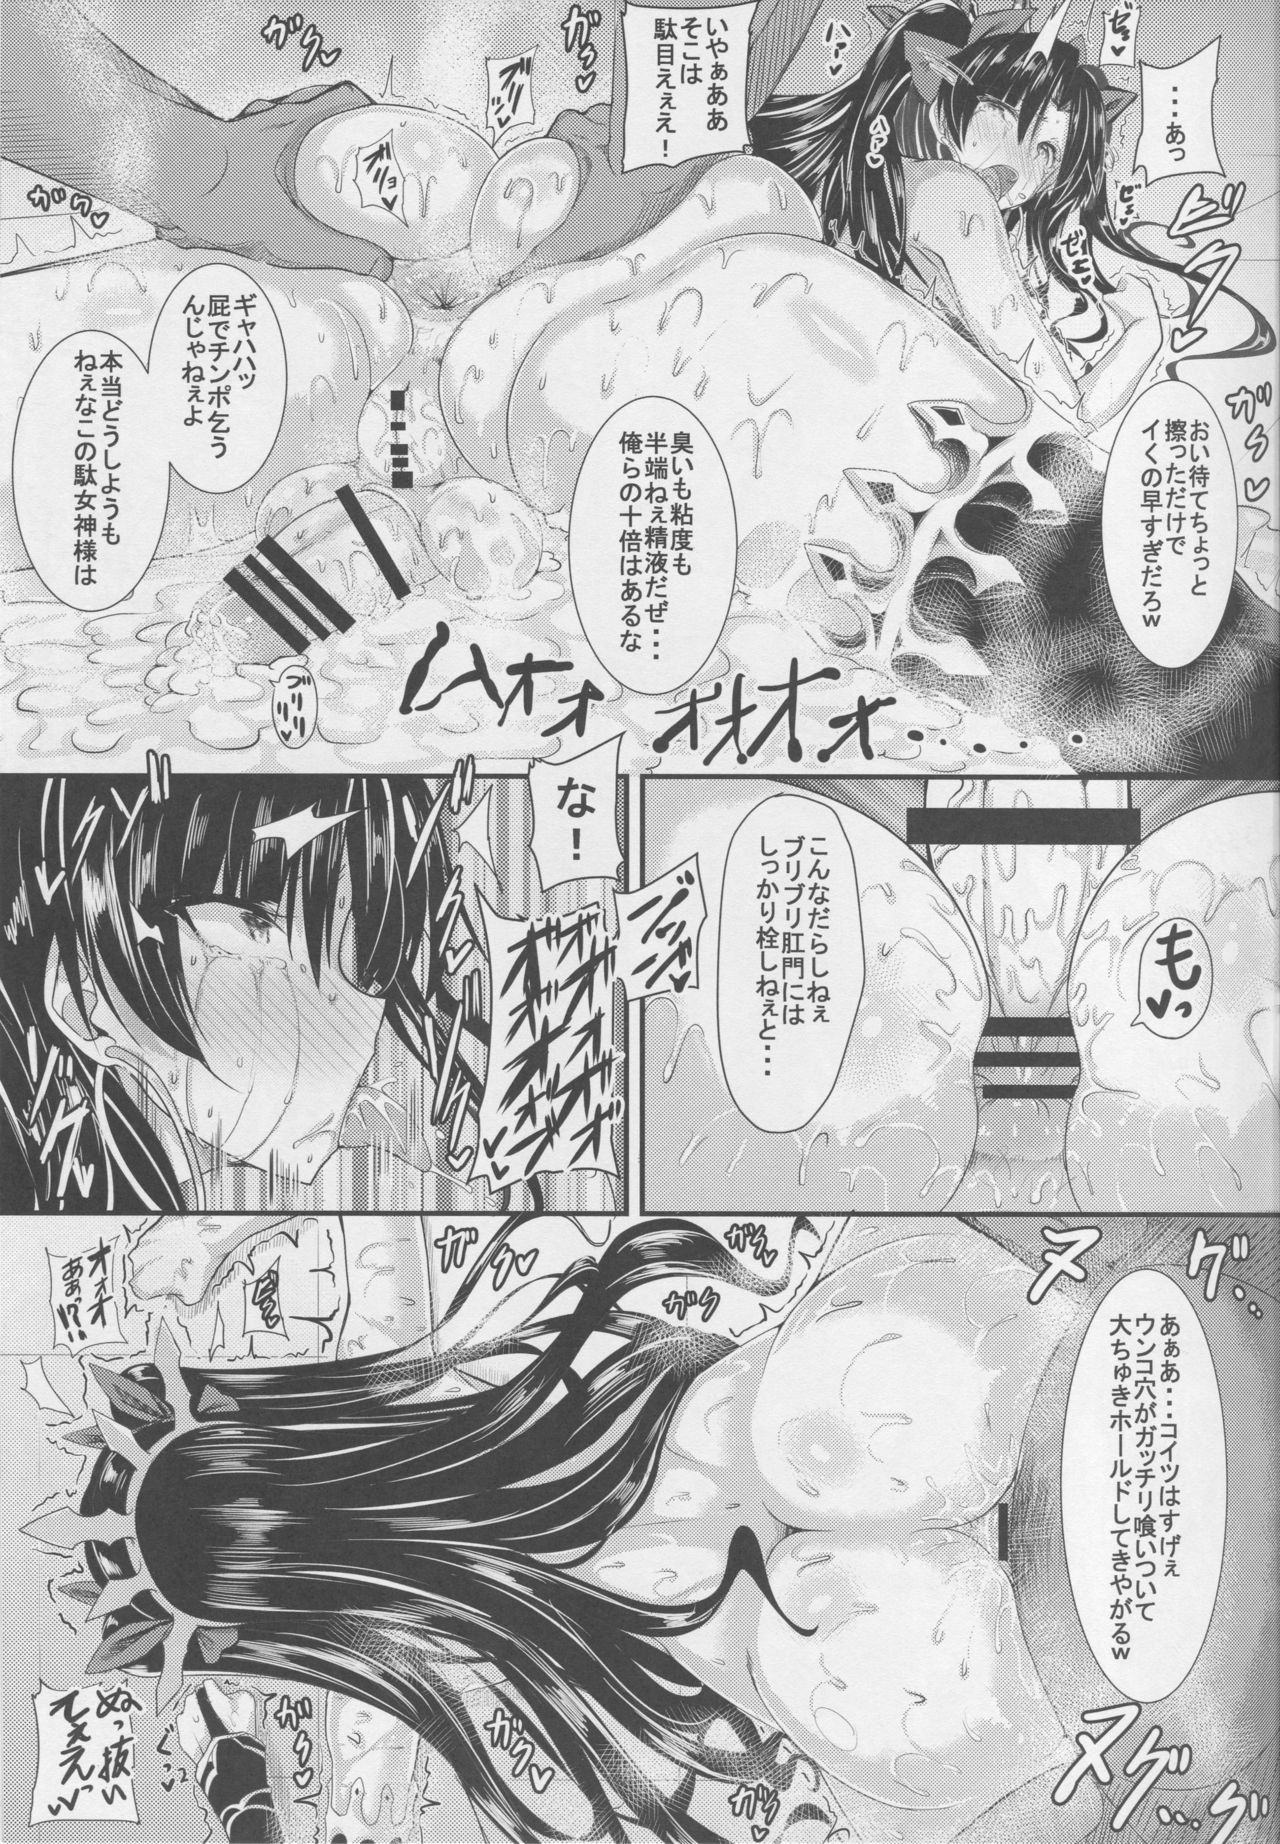 [HTSK (Rihito Akane)] HTSK8 (Fate/Grand Order) [2018-06-20] 12